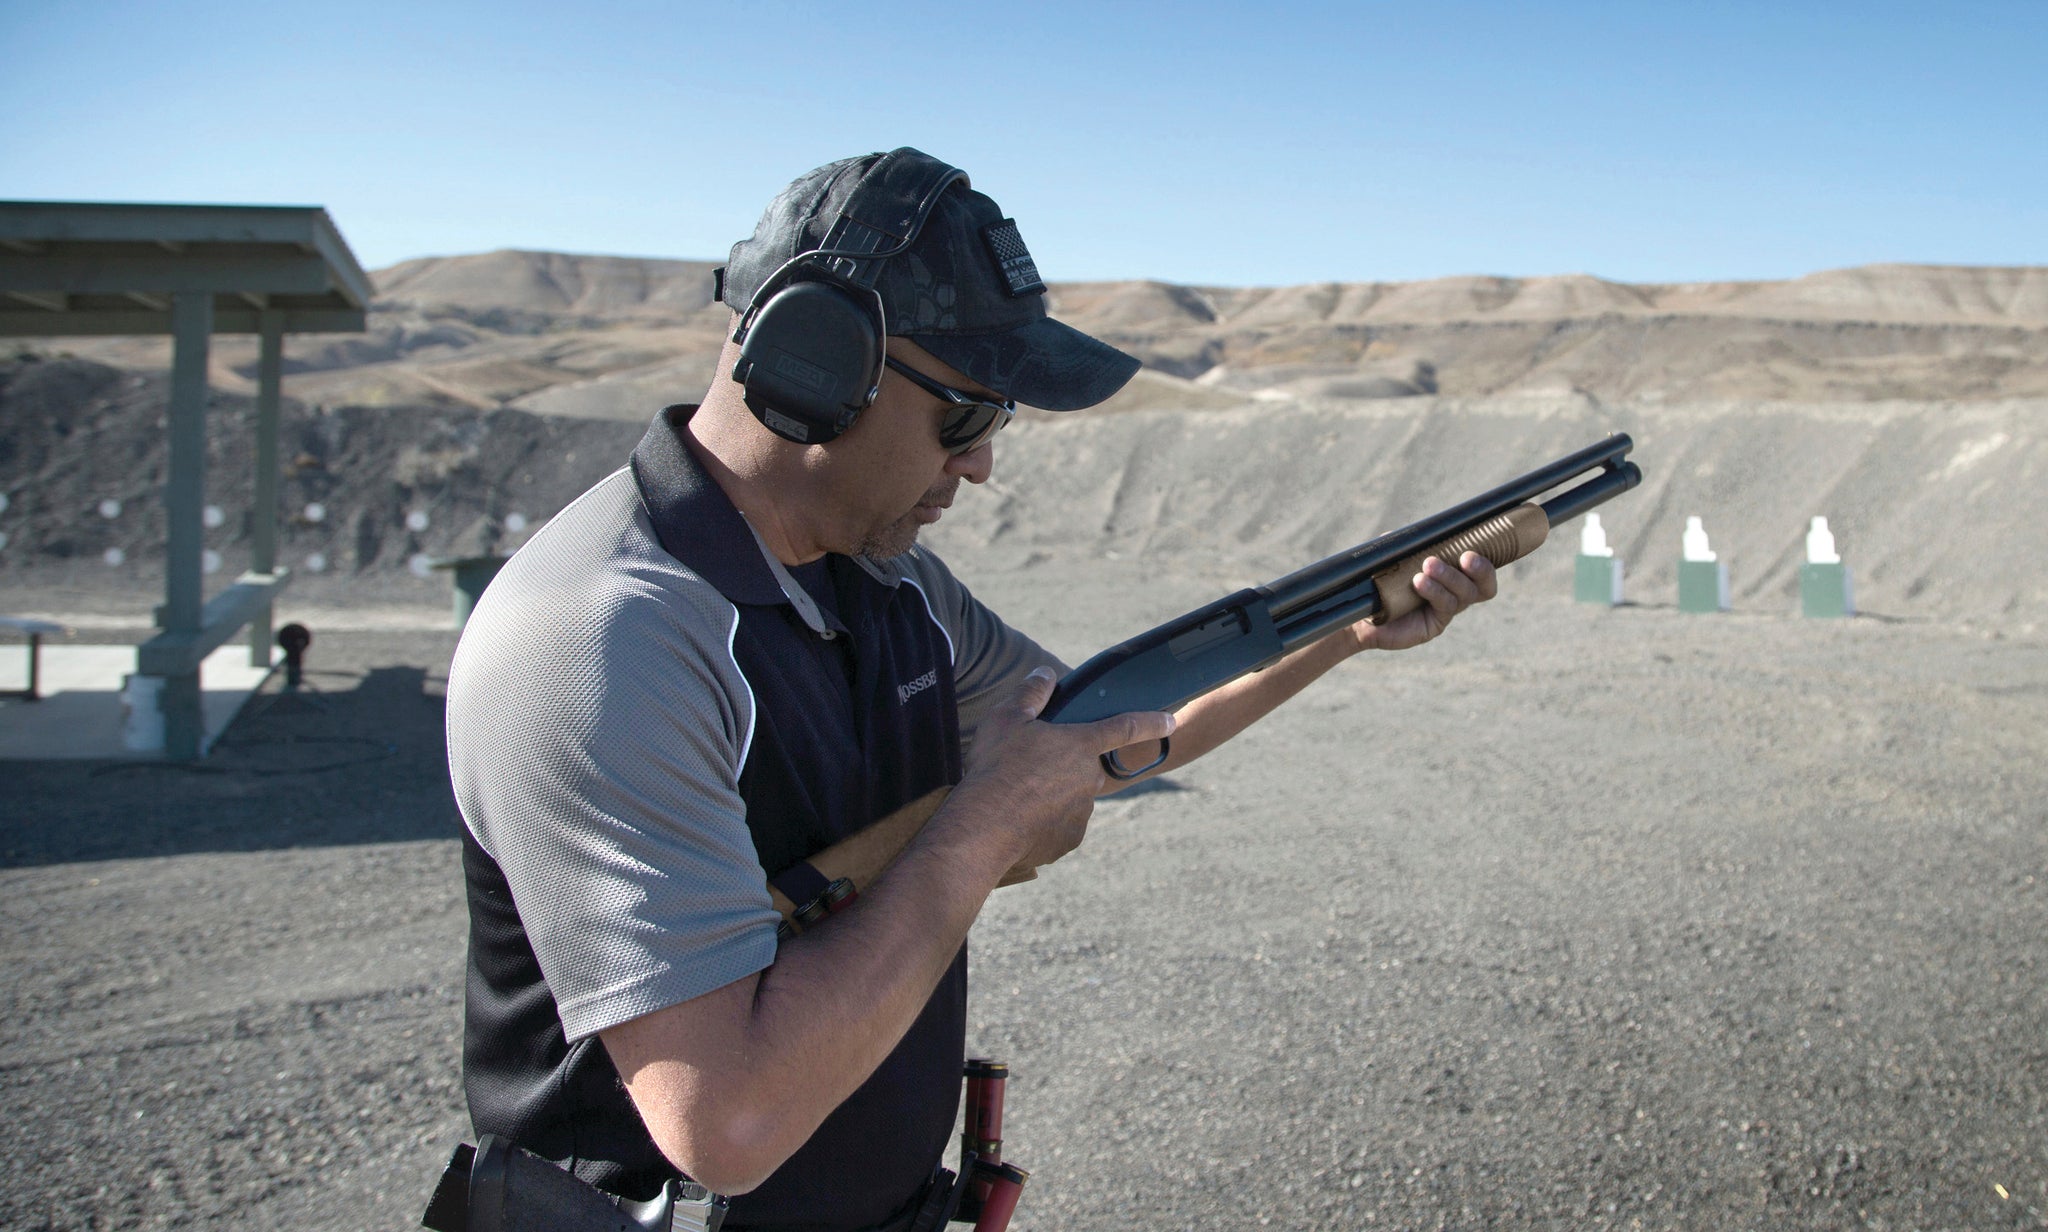 A shooter double-checks the action of his shotgun while on a shooting range